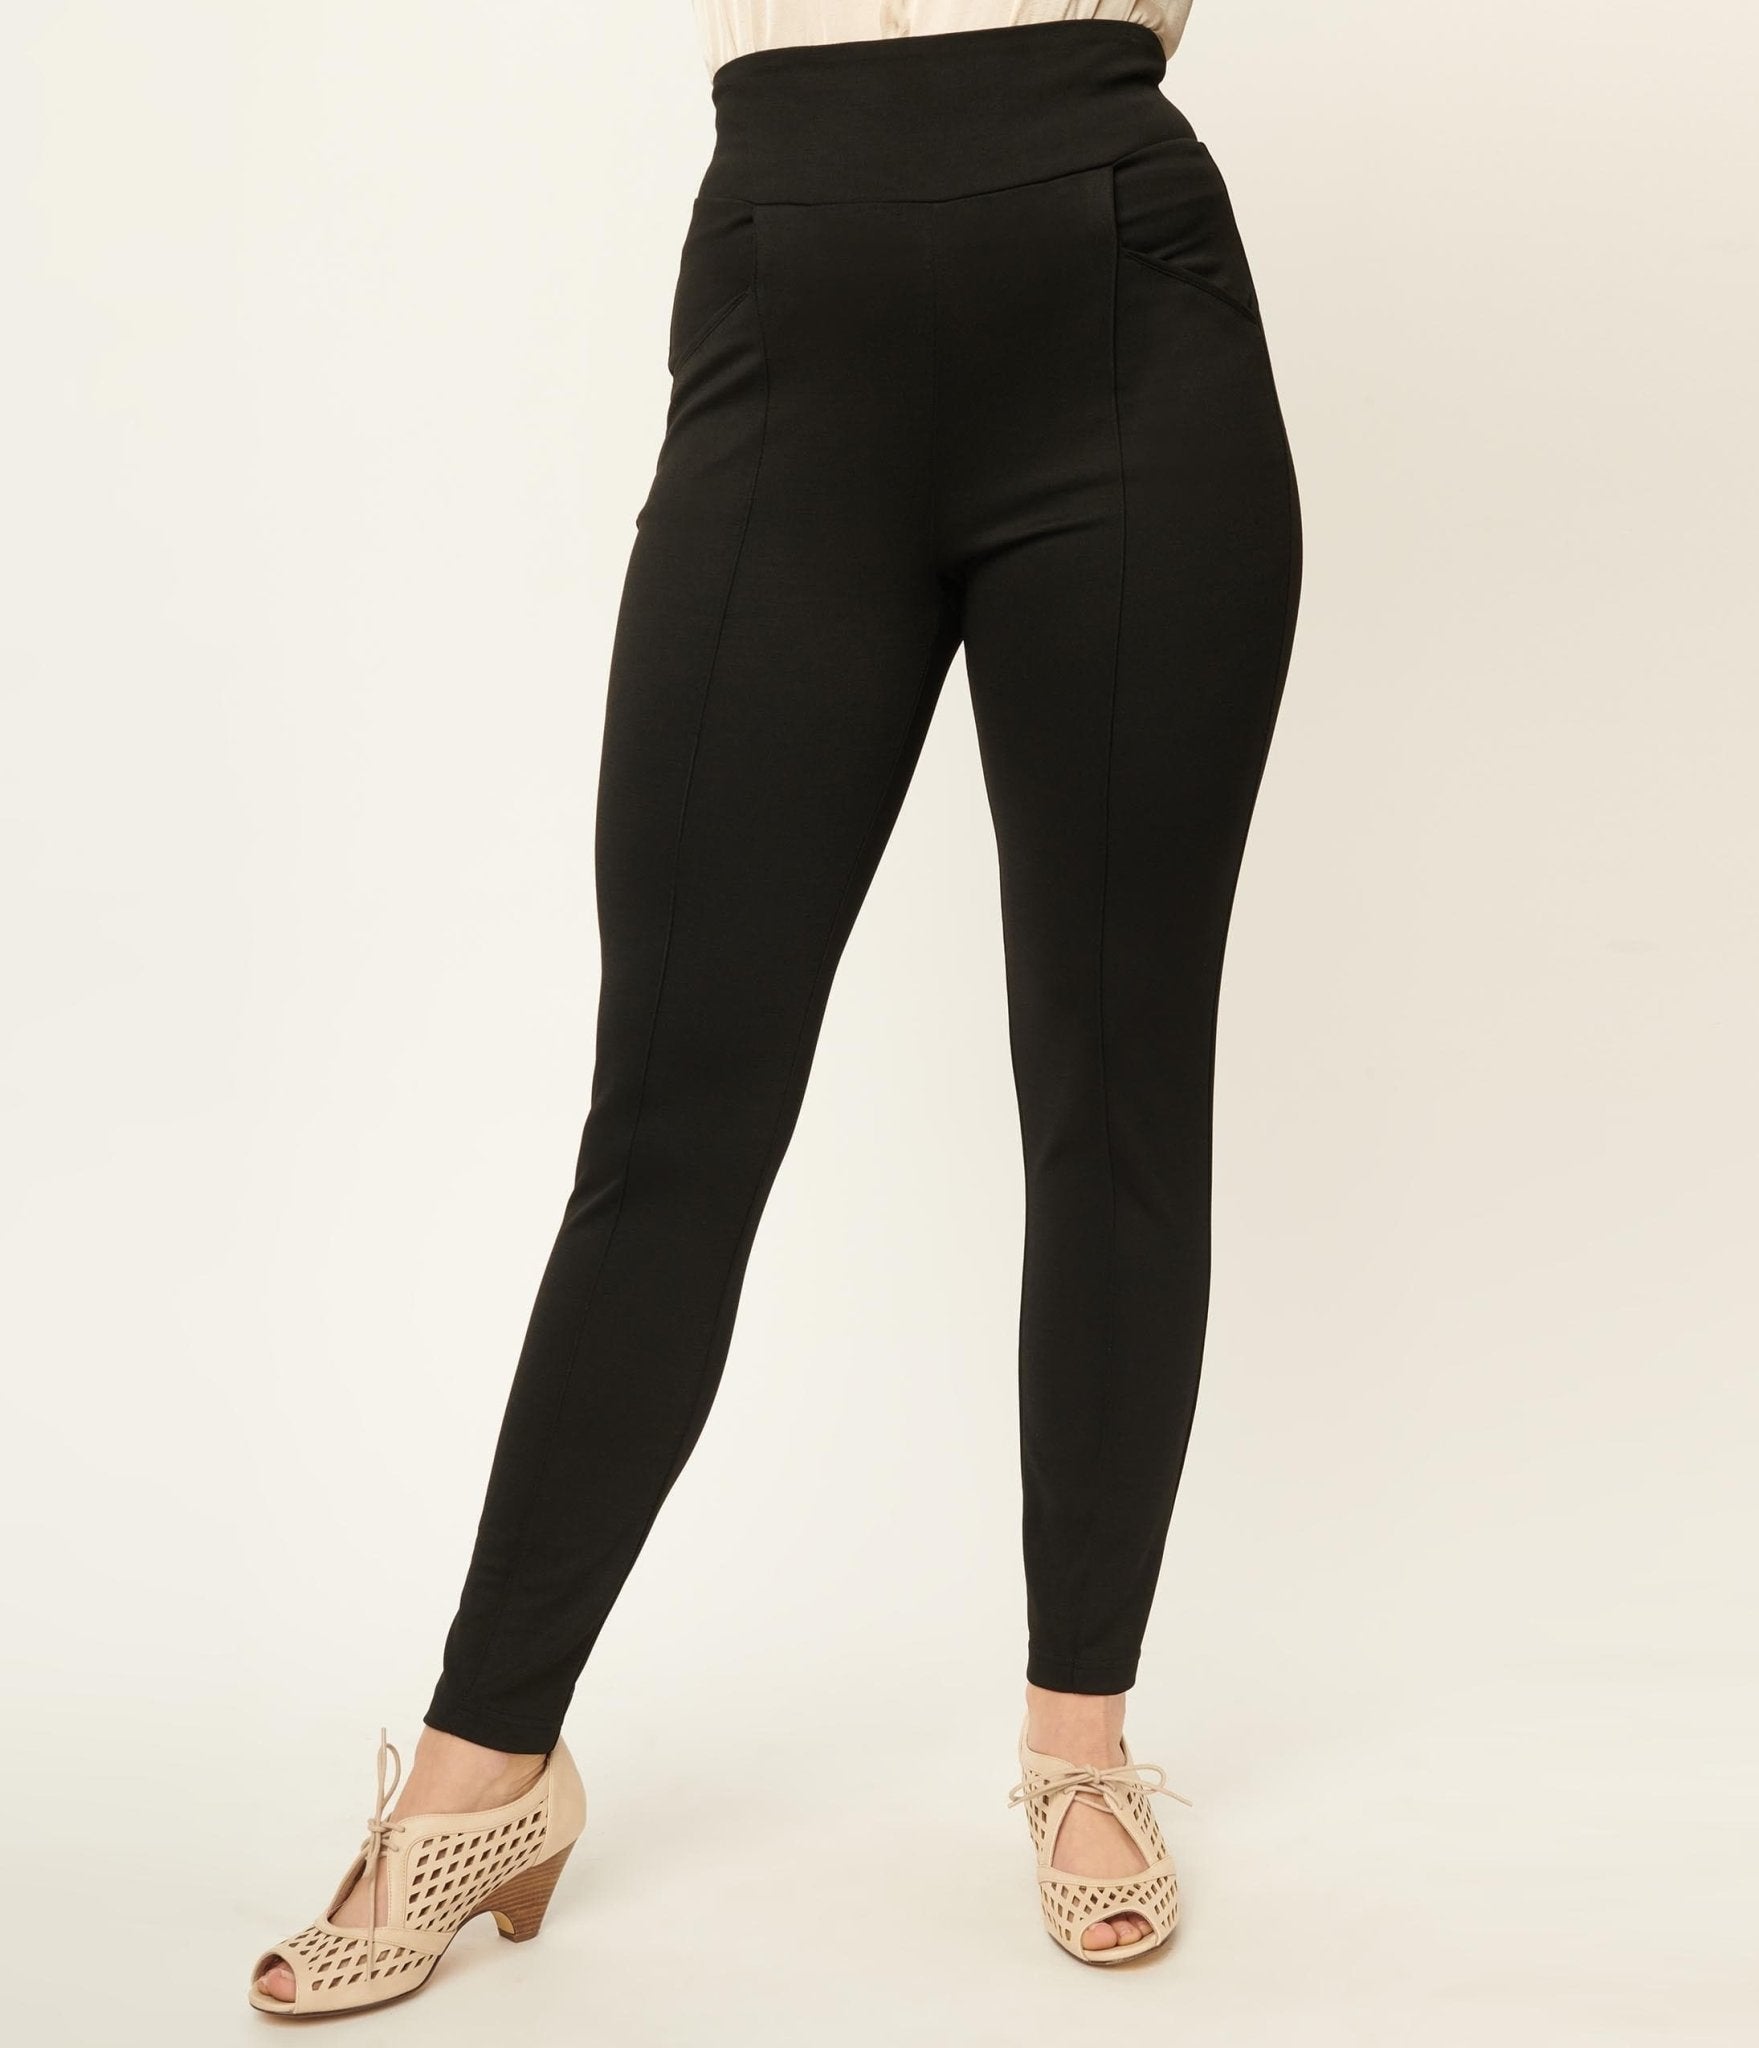 Ralph Lauren Metallic Trim Ponte Pants Women's Plus Size 1X Black Stretch 